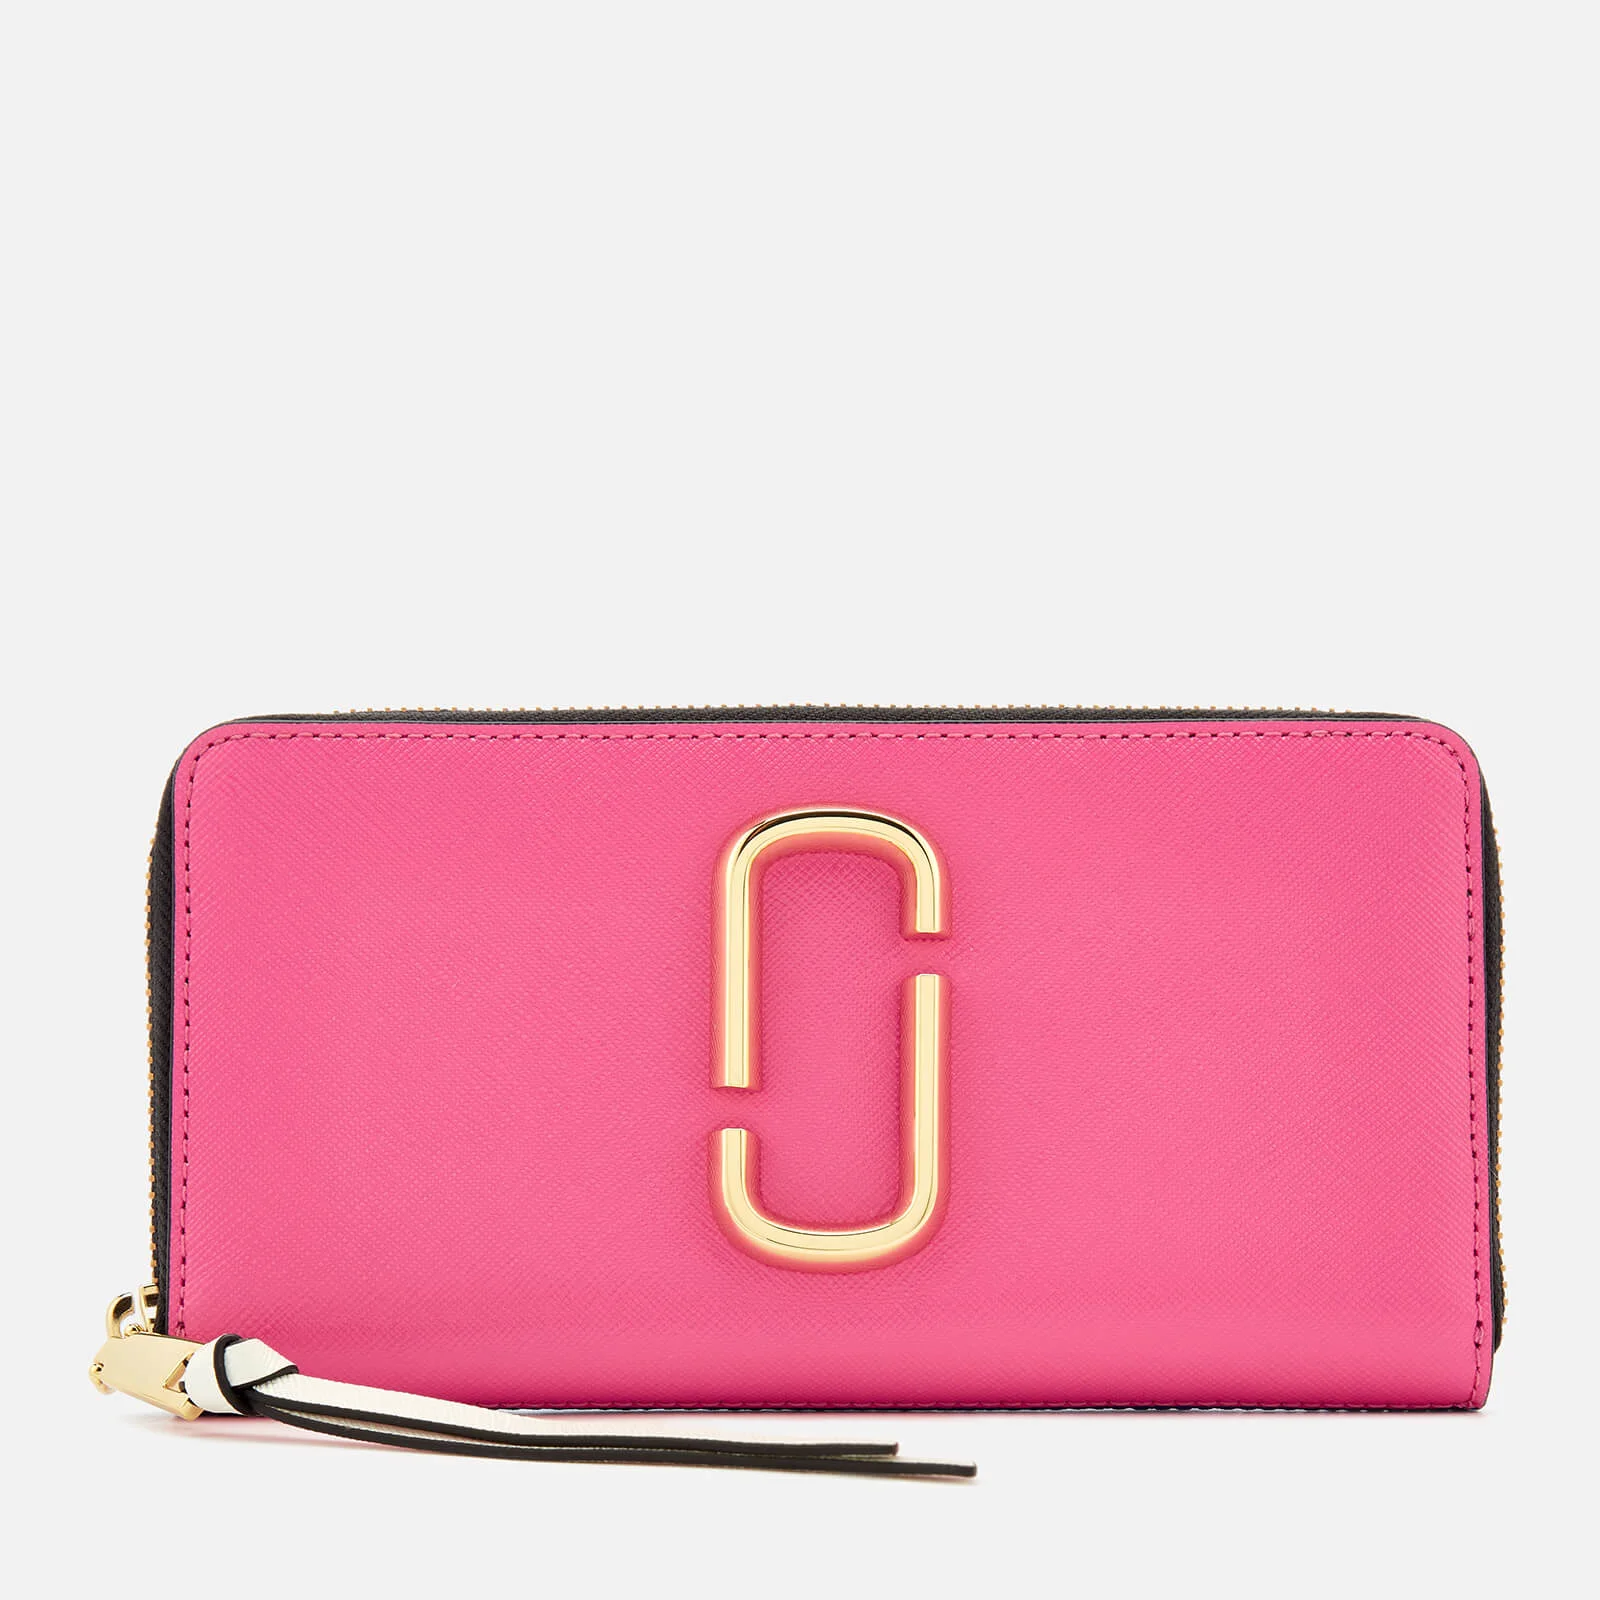 Marc Jacobs Women's Snapshot Continental Wallet - Vivid Pink Image 1